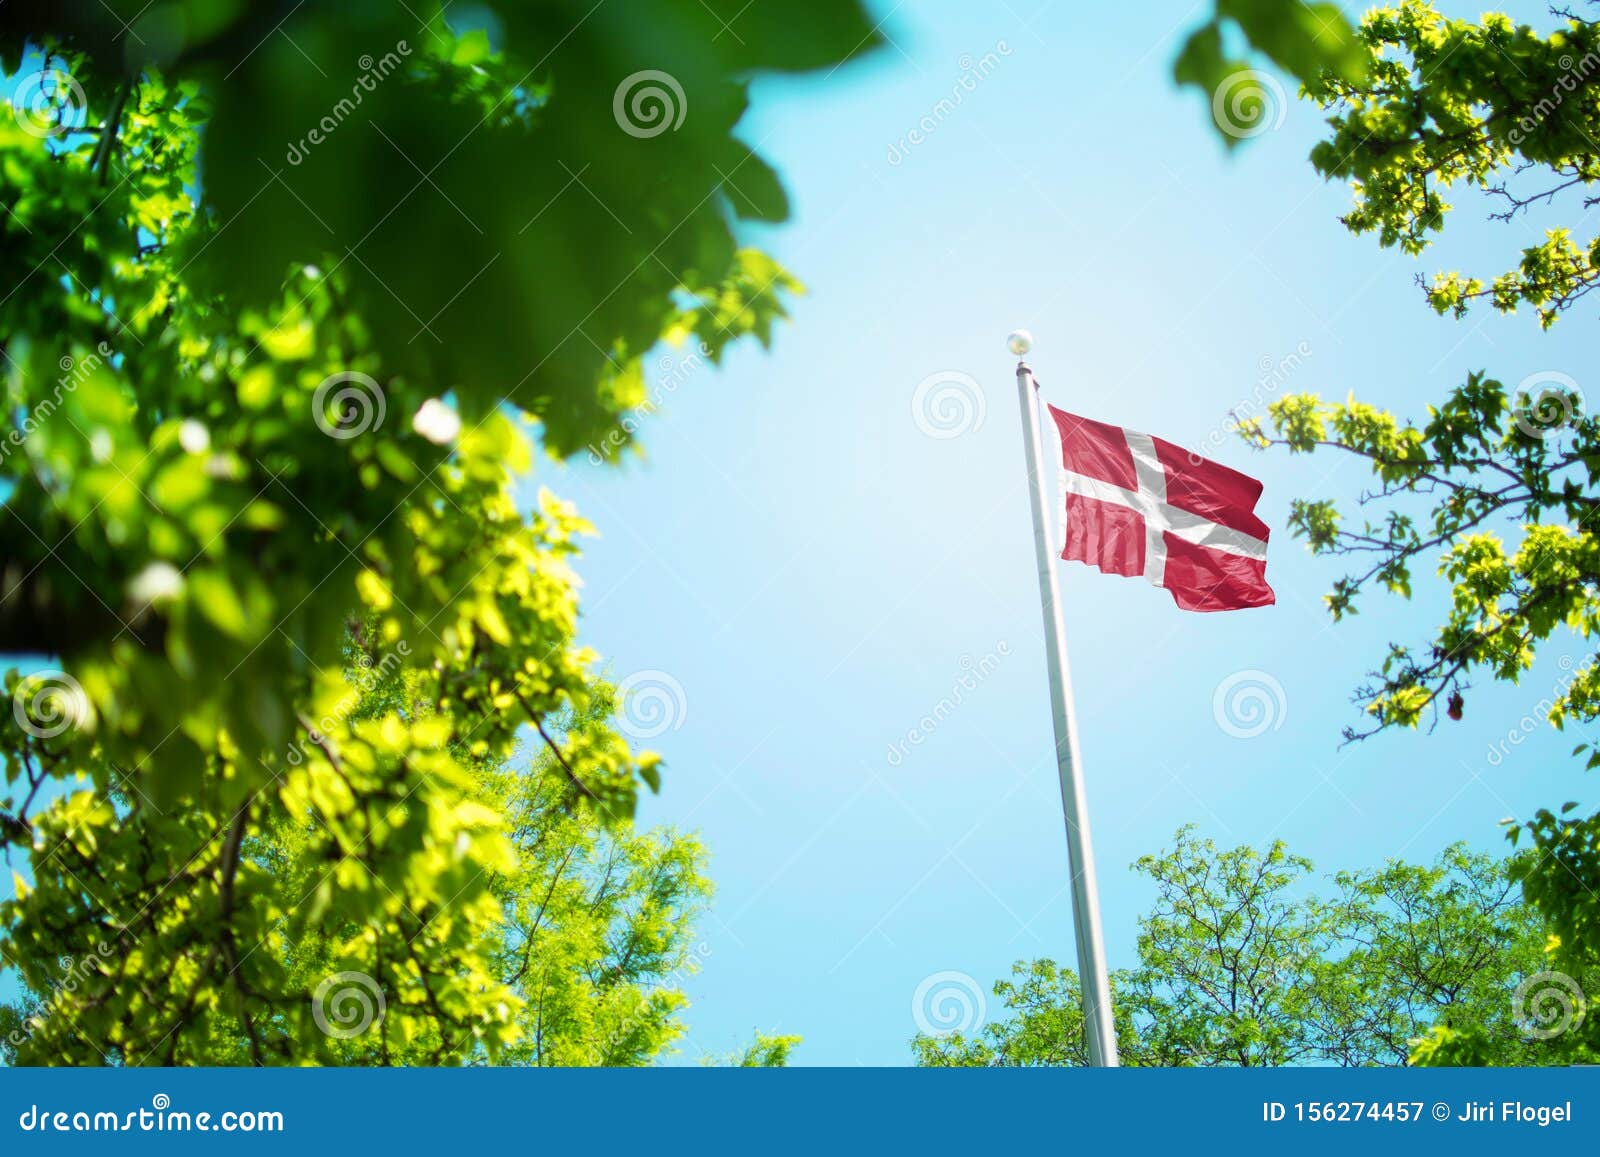 denmark flag, danish flag waving in the wind between trees